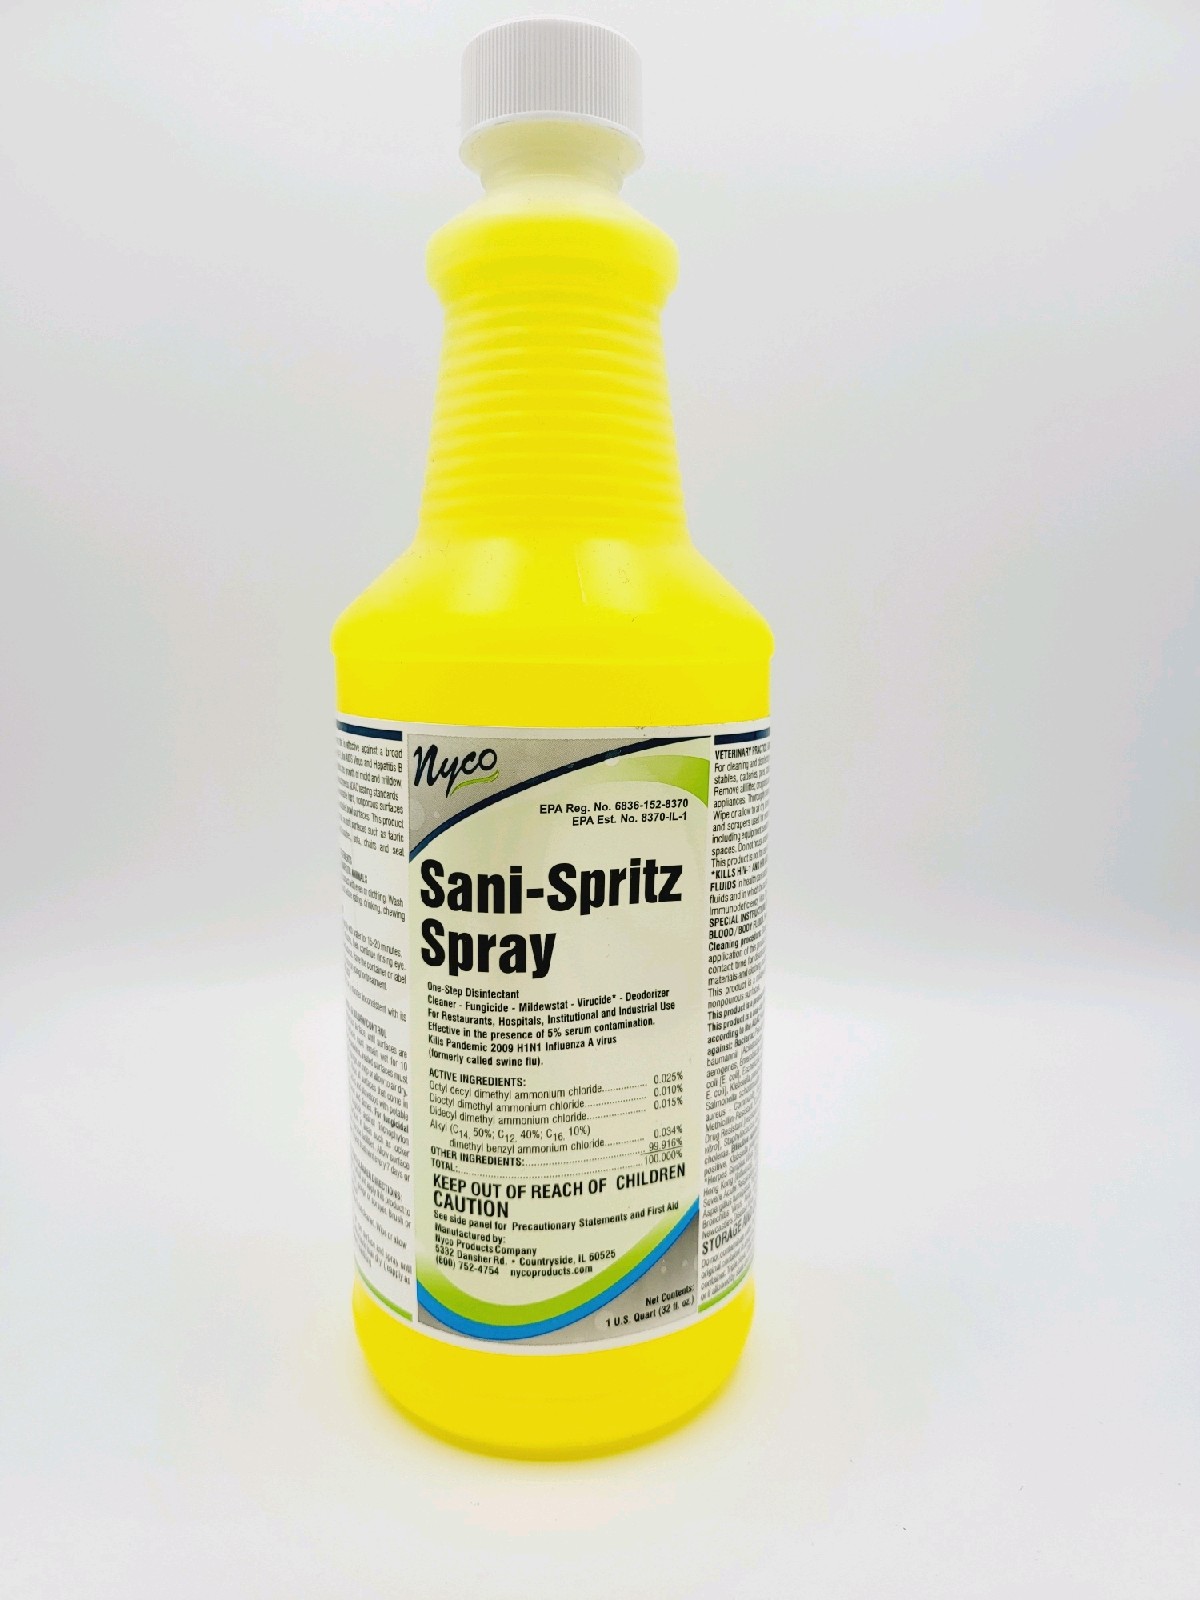 Sani-Spritz Spray One-Step Disinfectant